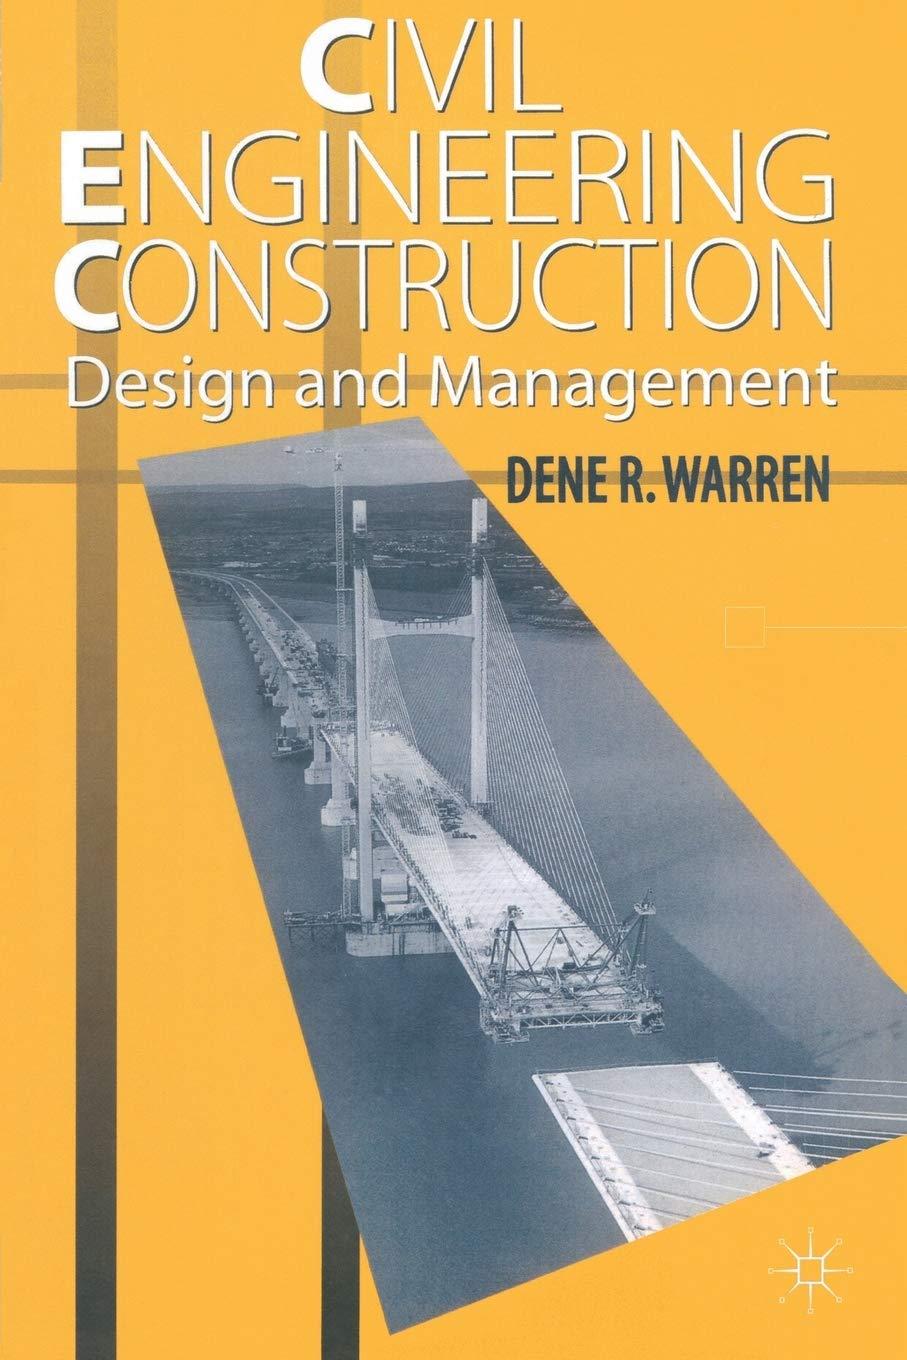 civil engineering construction design and management 1996 edition dene warren 978-0333636824